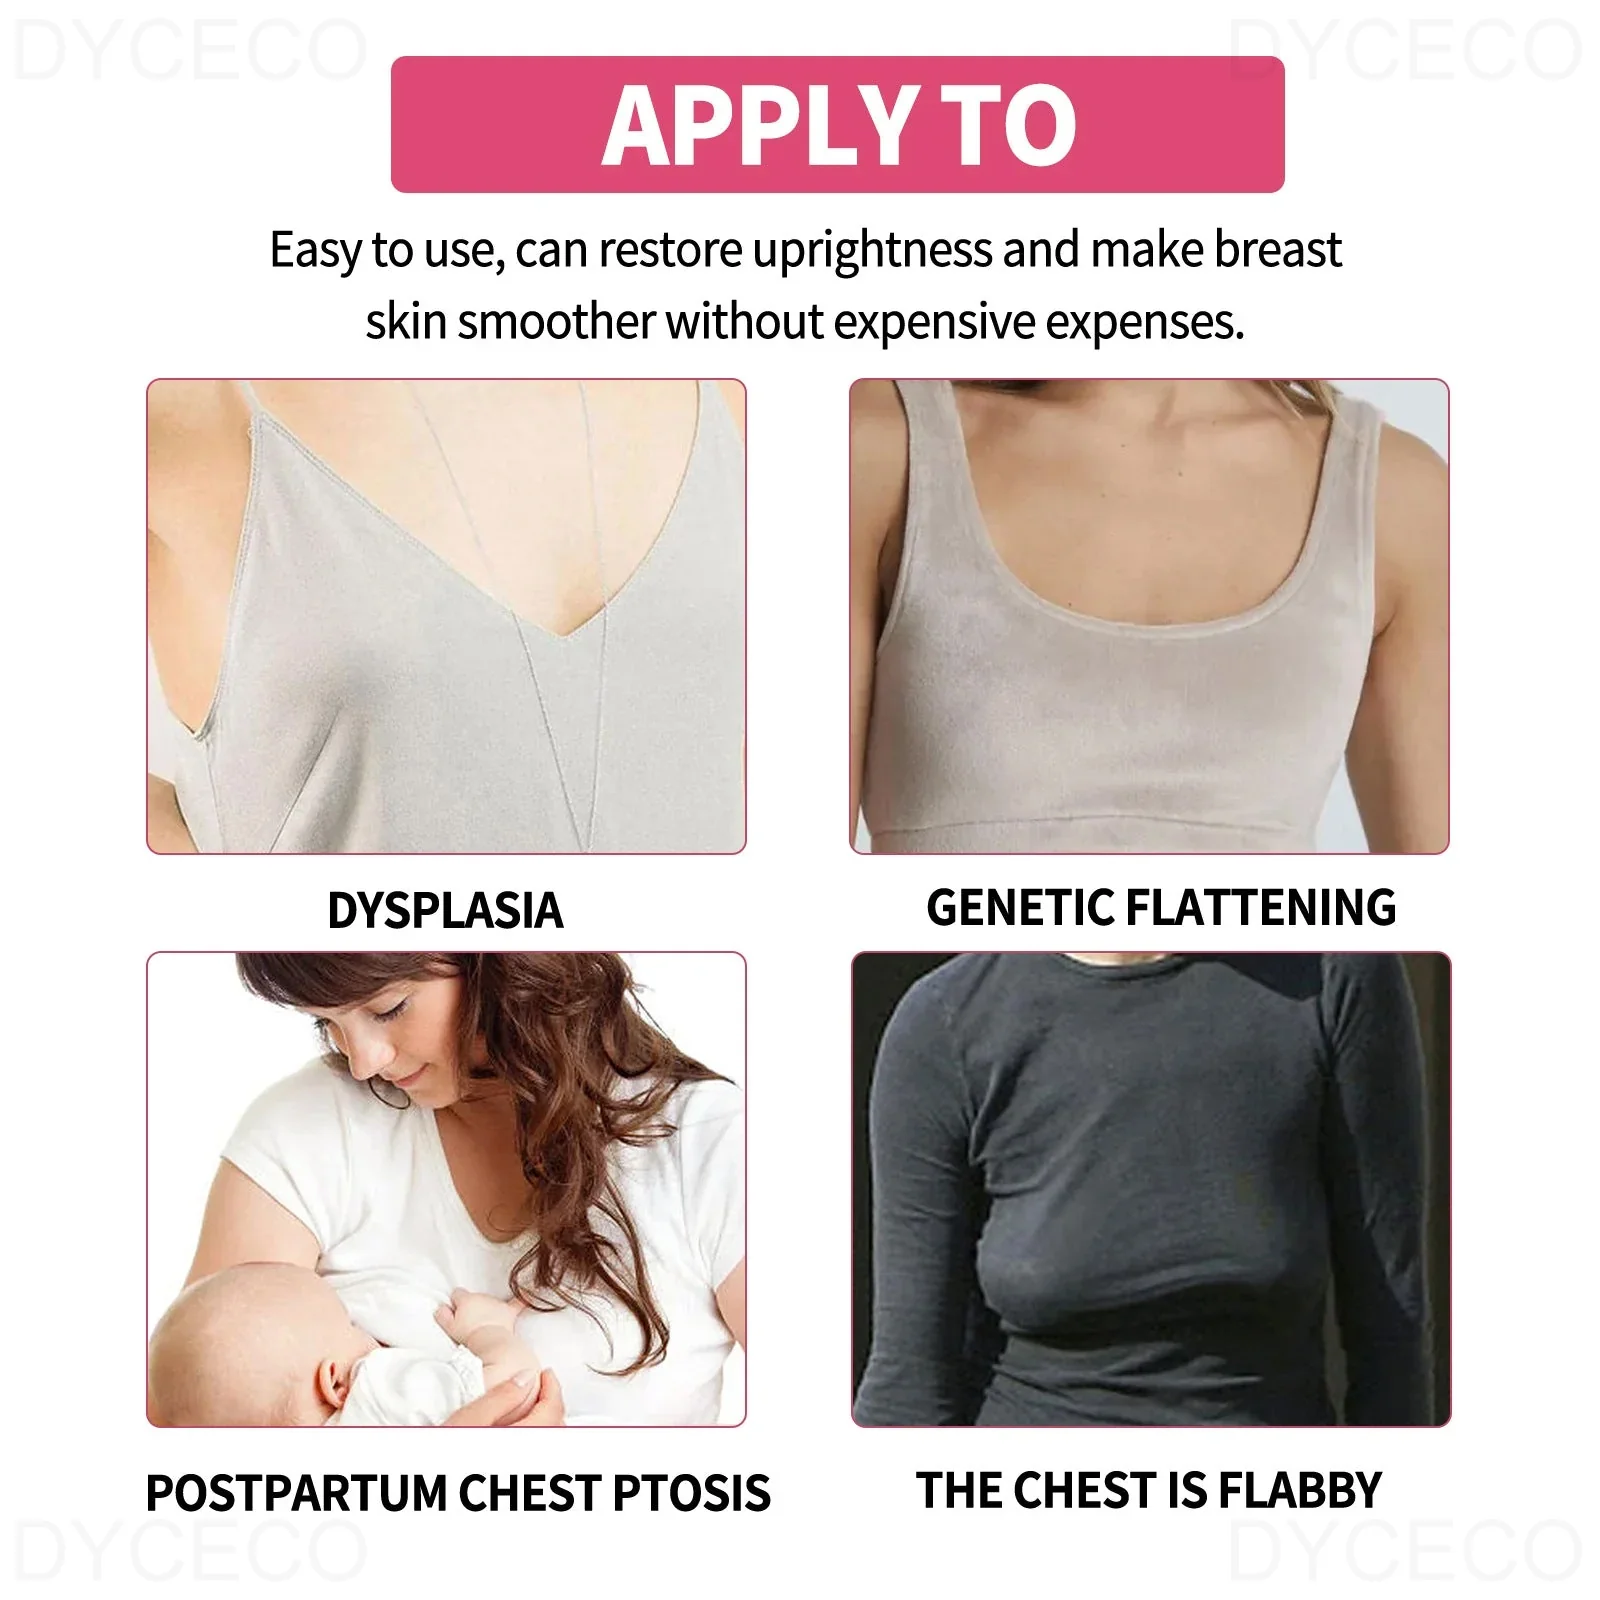 SHLOVA™ Breast Enhancement Patch 10pcs - shlova